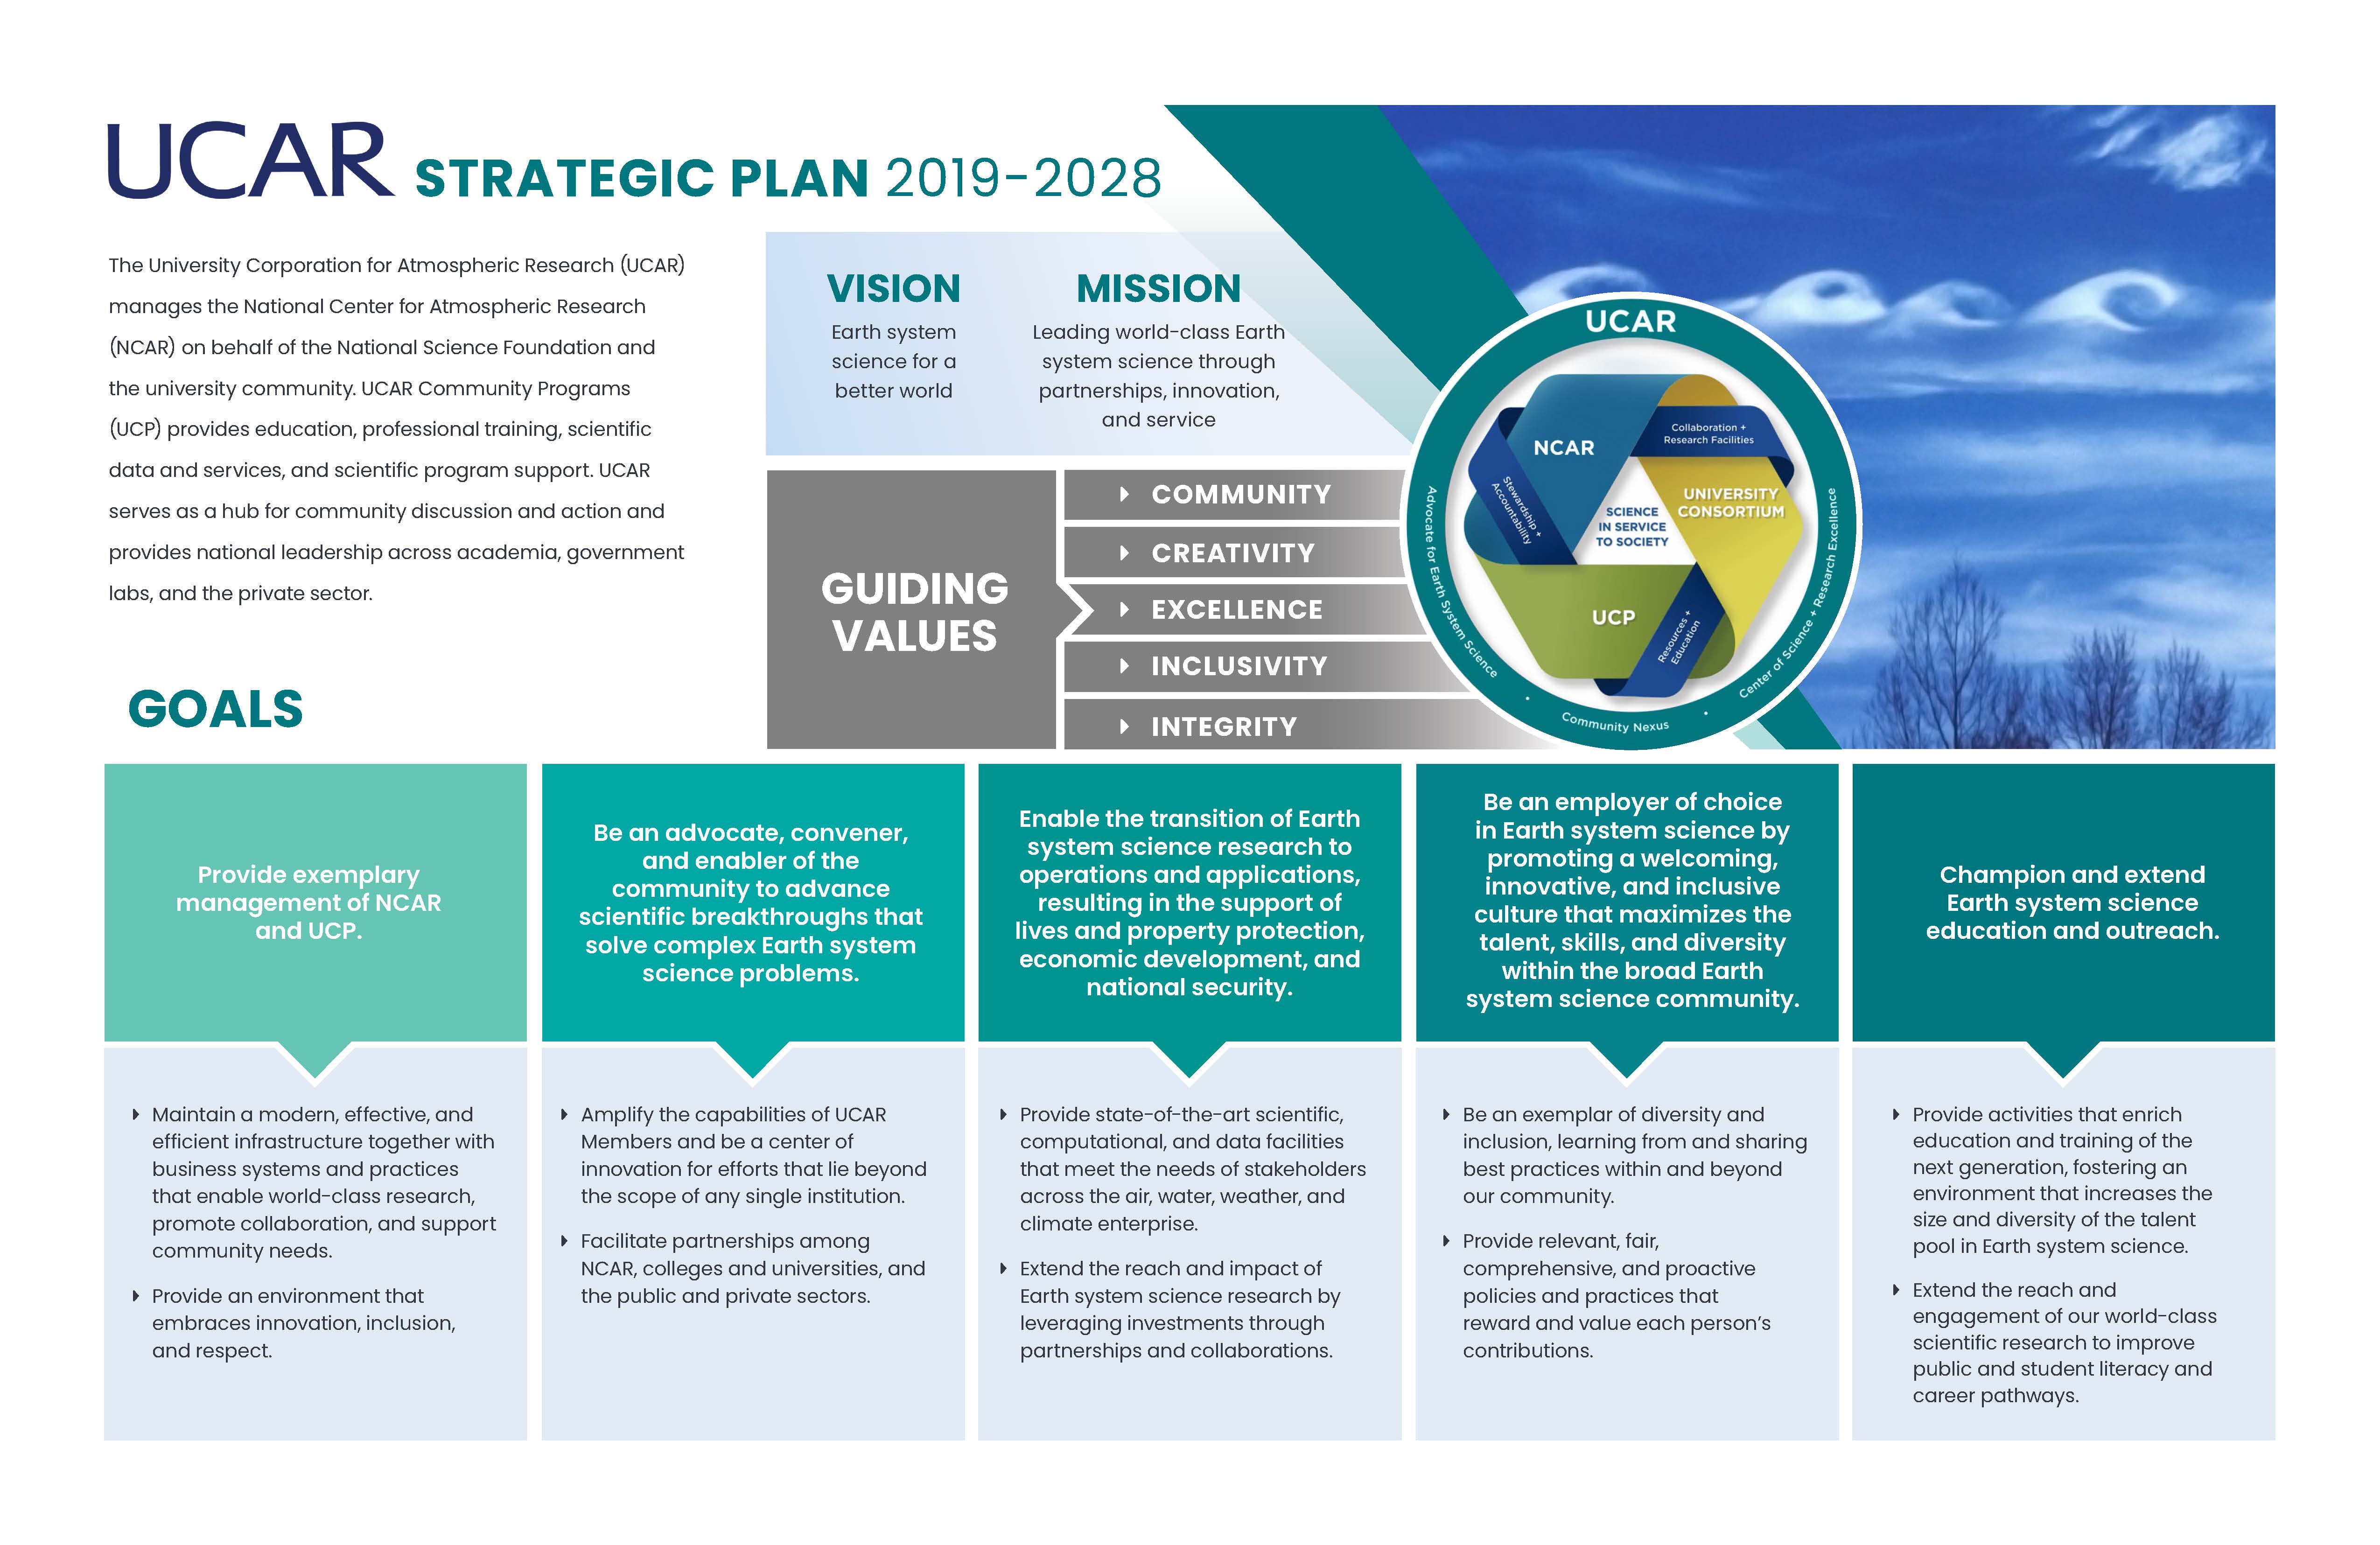 UCAR Strategic Plan infographic